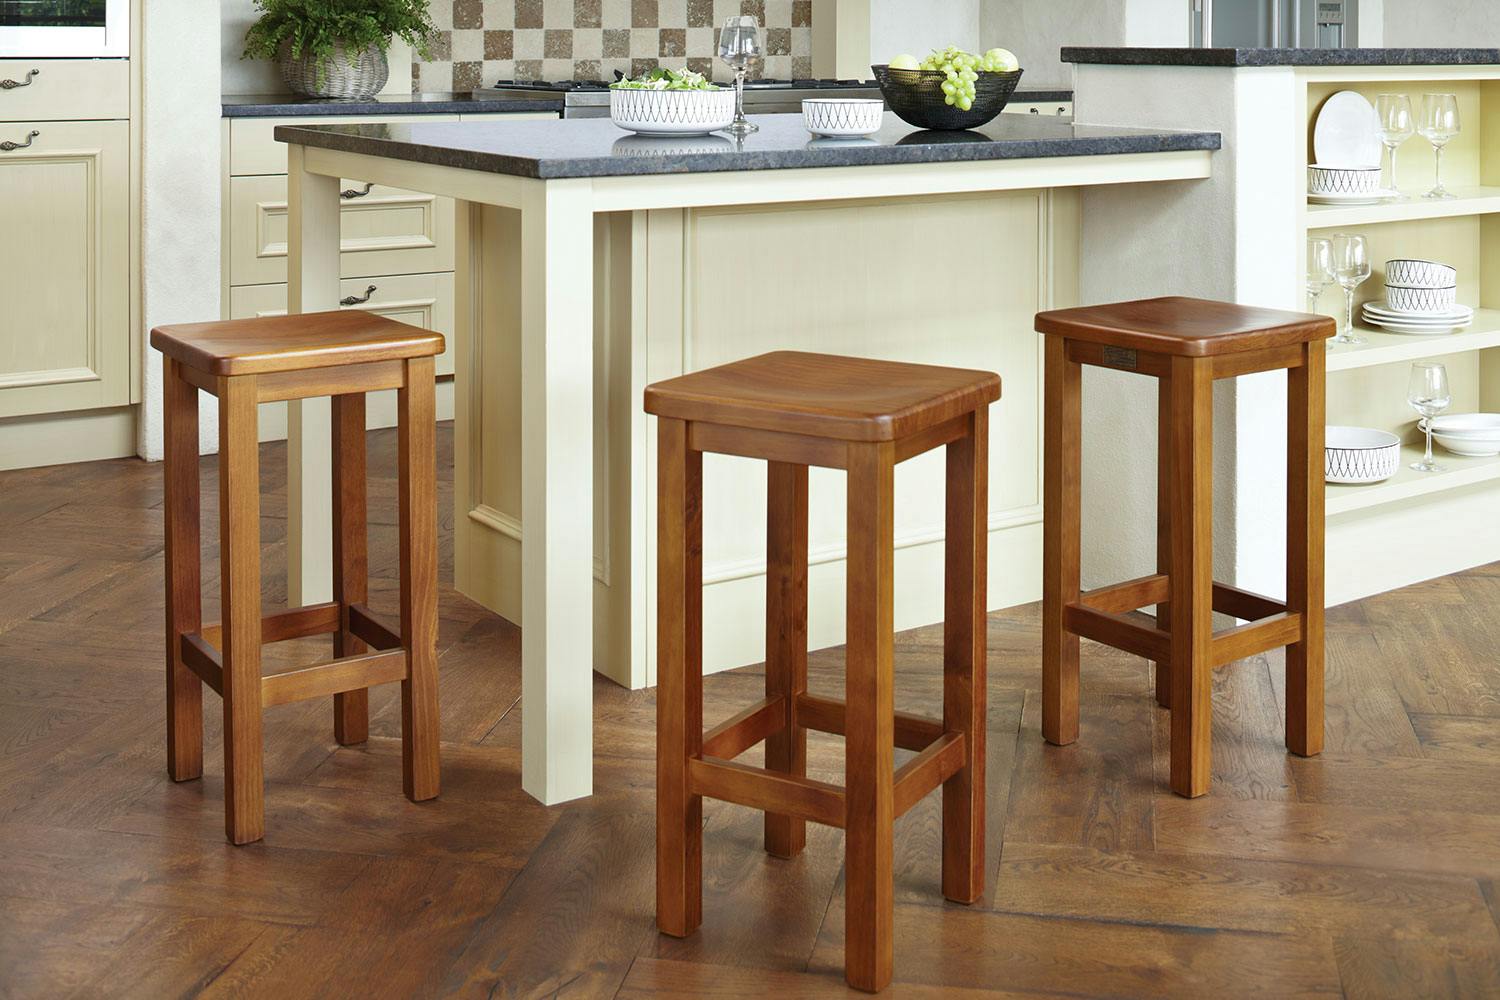 wooden kitchen bar stools nz